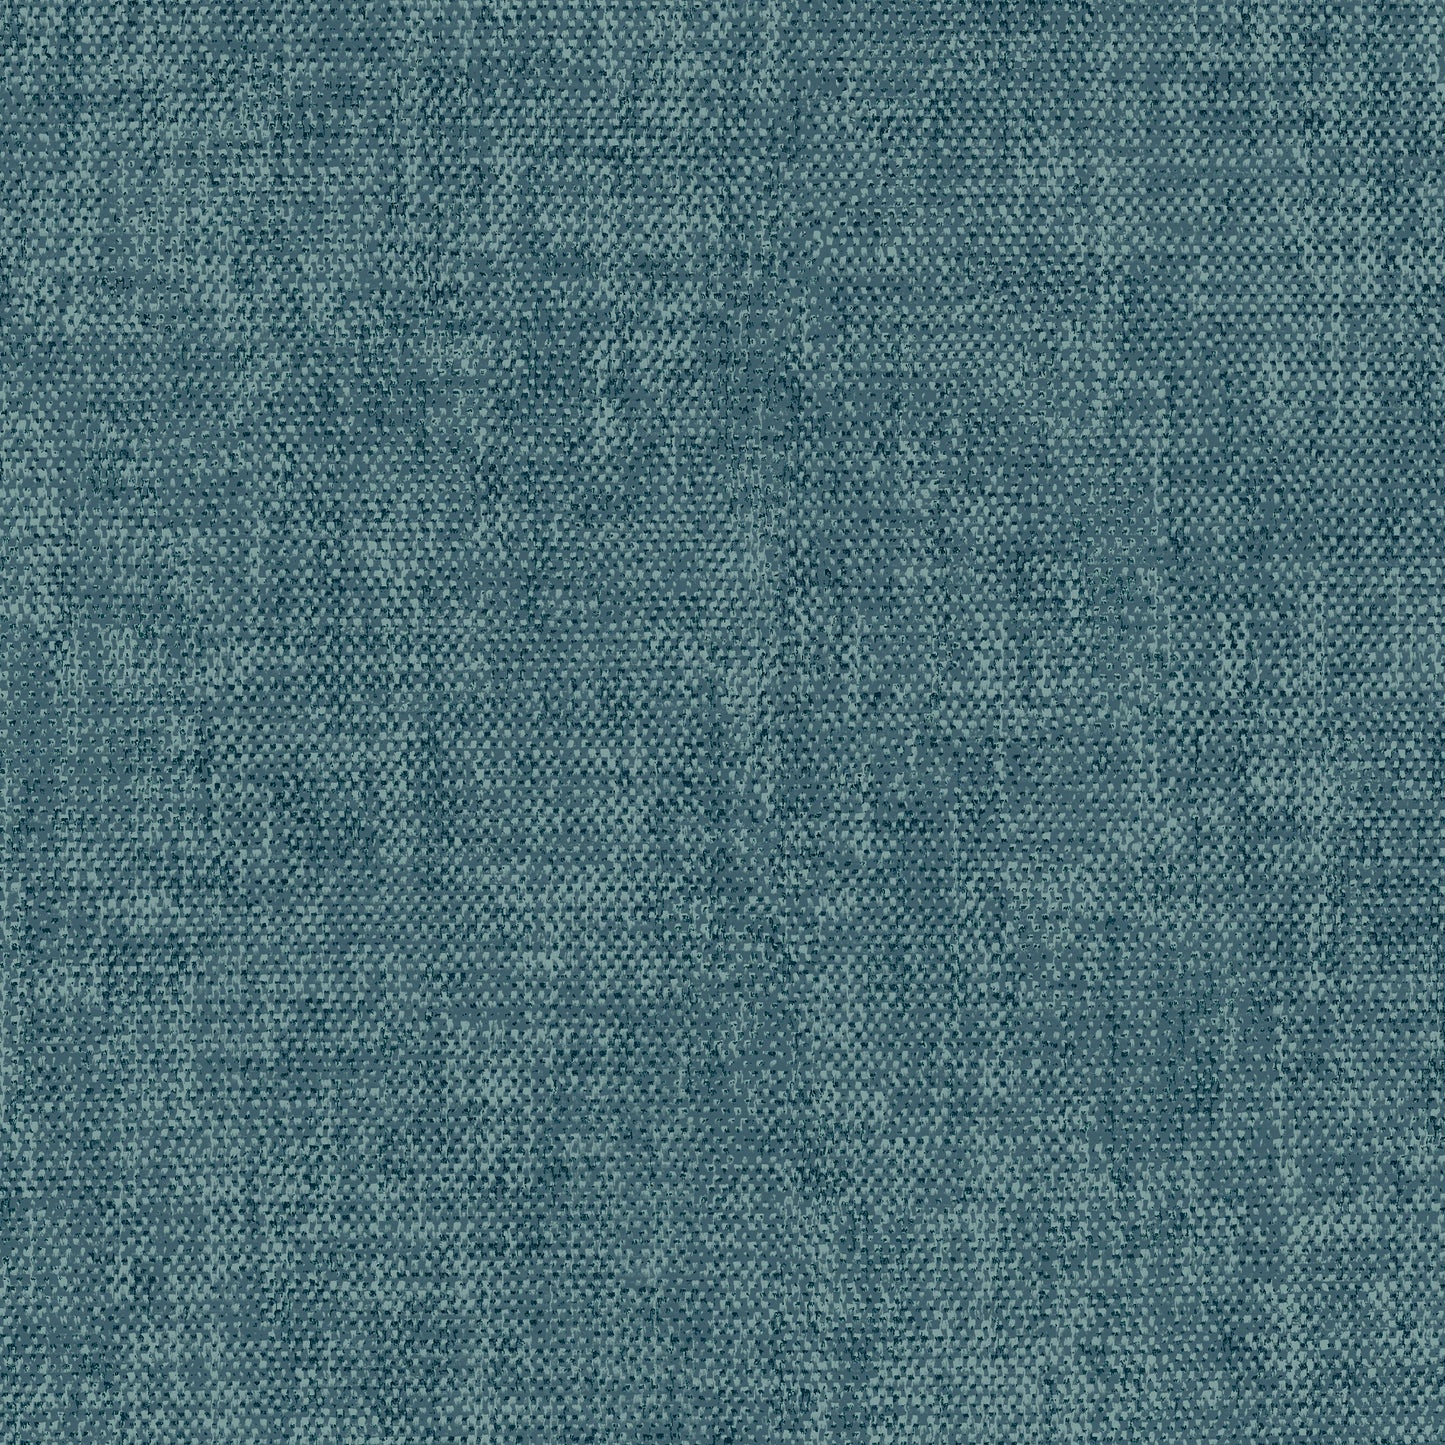 Graham & Brown Zara Teal Blue Wallpaper (122419)